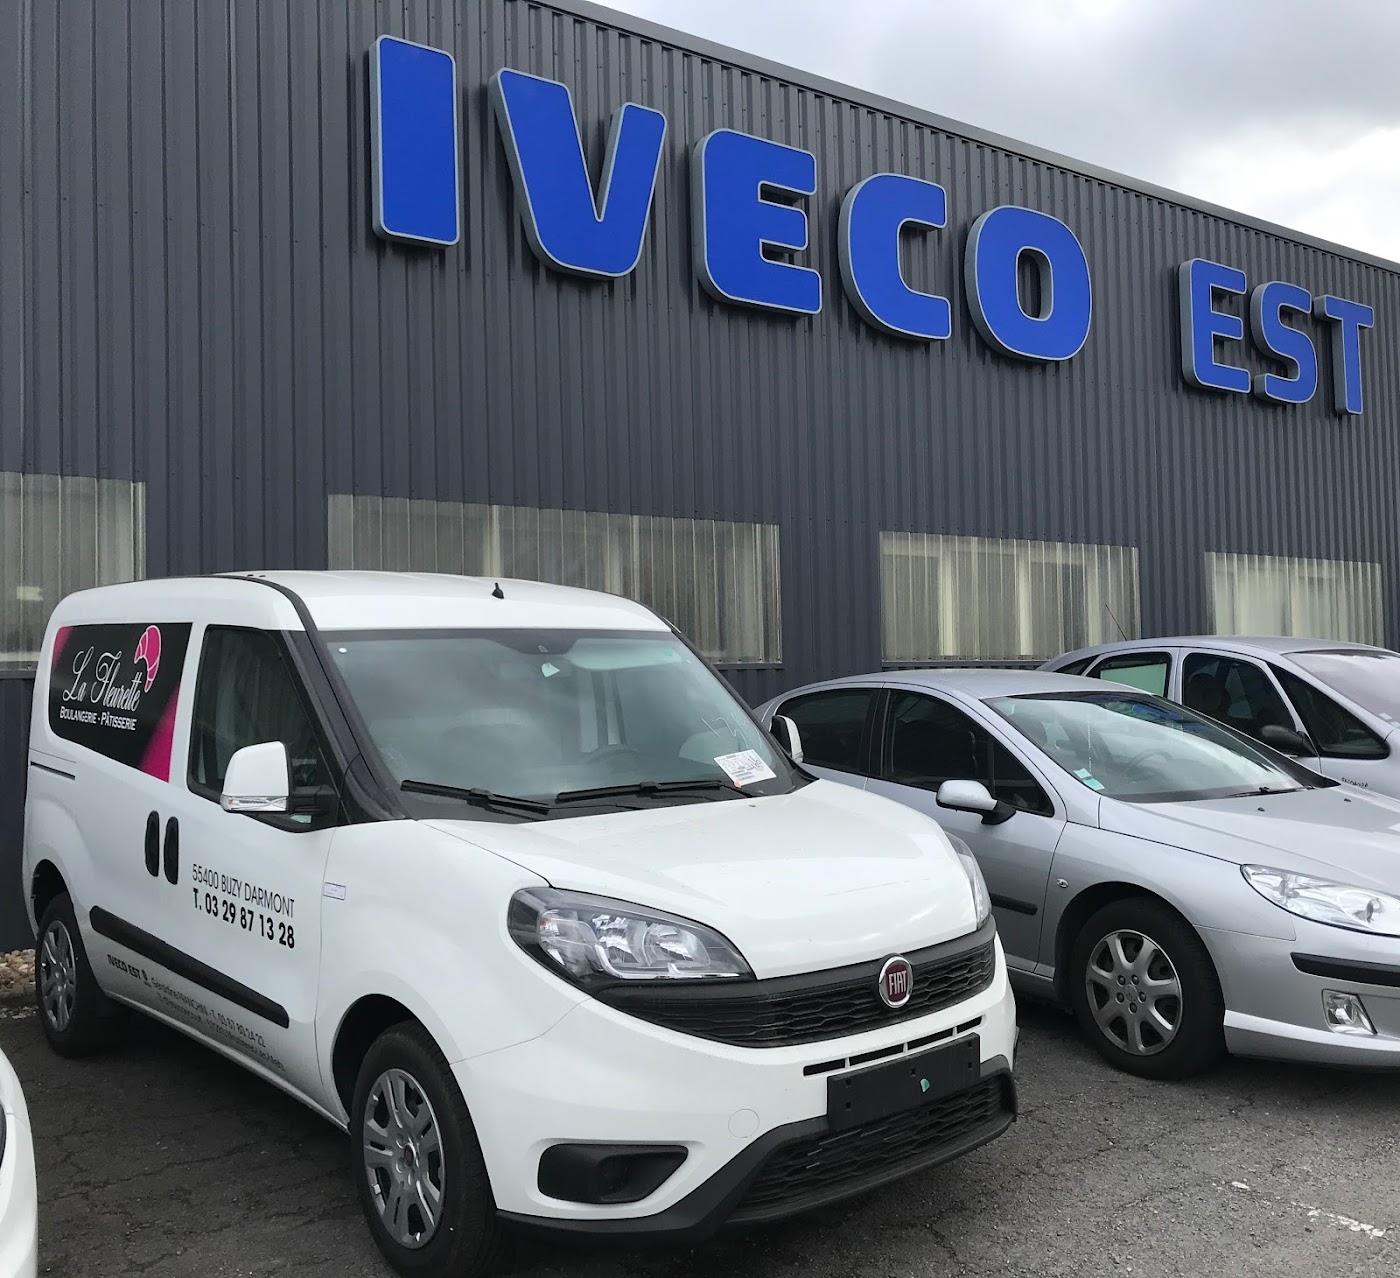 IVECO EST - Fiat Professional